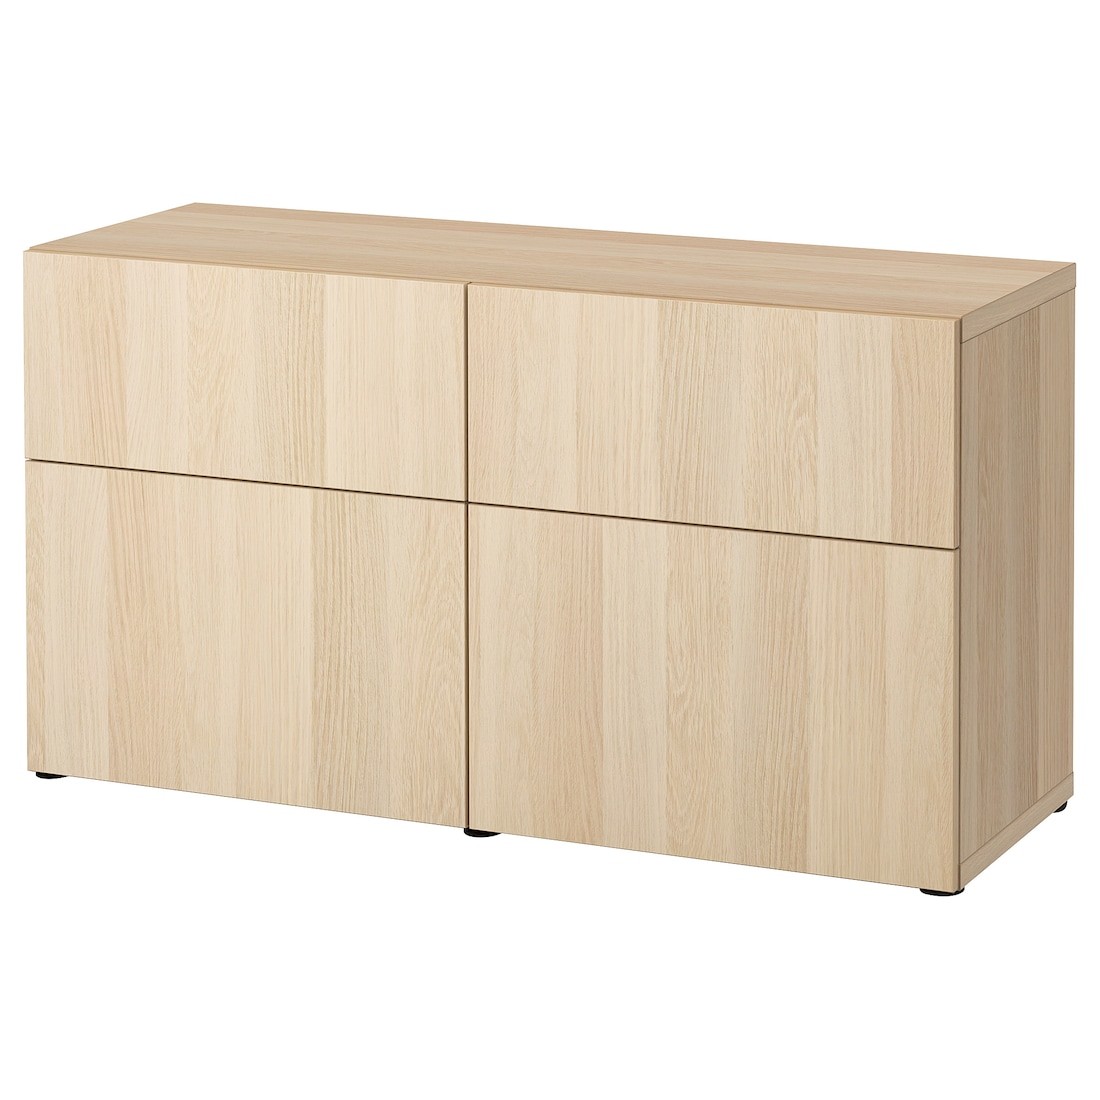 IKEA BESTÅ БЕСТО Комбинация для хранения с дверцами / ящиками, под беленый дуб / Lappviken под беленый дуб, 120x42x65 см 69412640 | 694.126.40